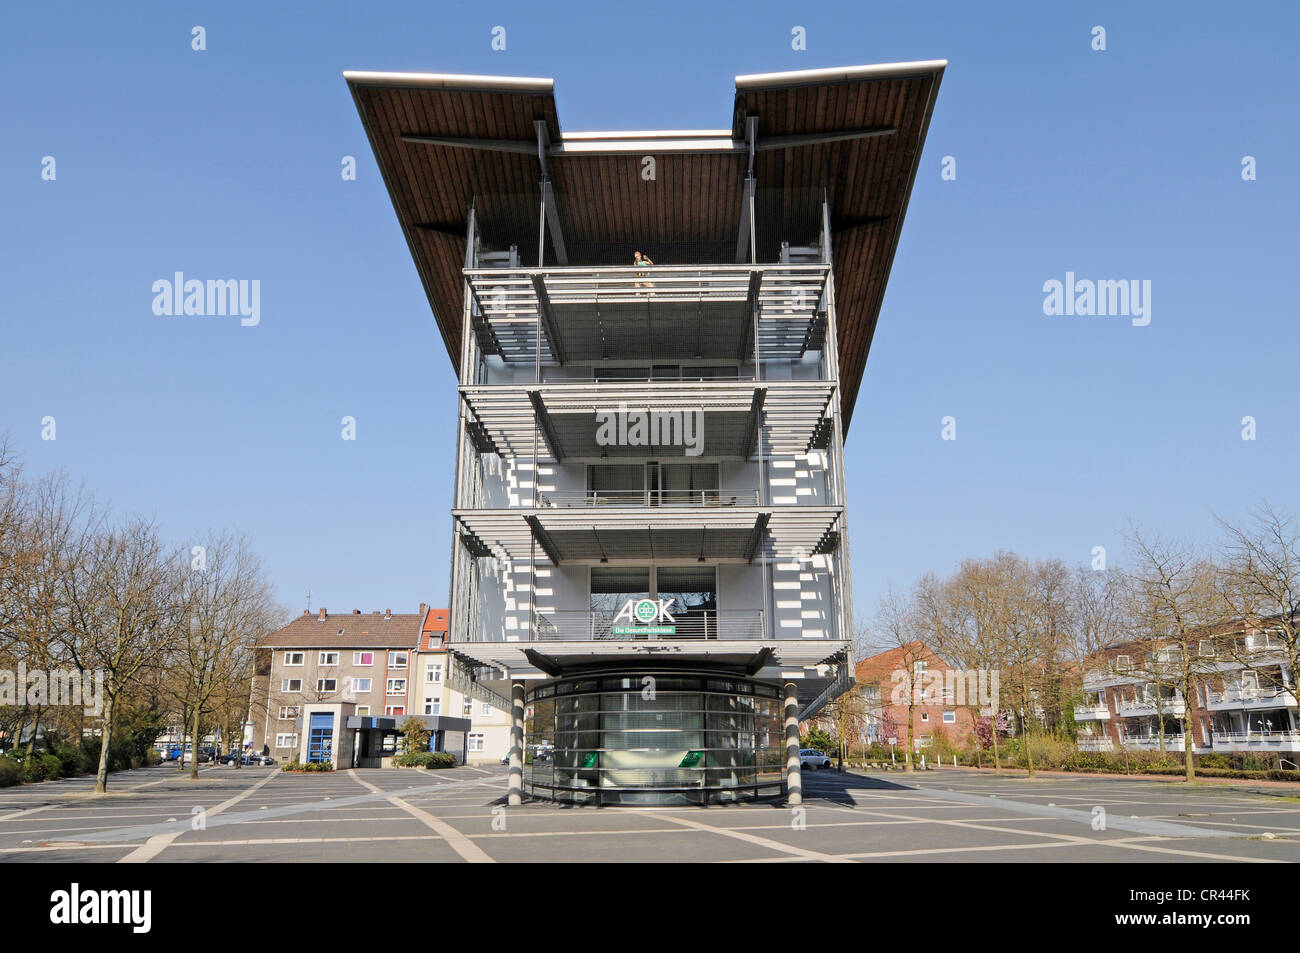 AOK Krankenkasse health insurance company, Gelsenkirchen, Ruhr area, North Rhine-Westphalia, Germany, Europe Stock Photo